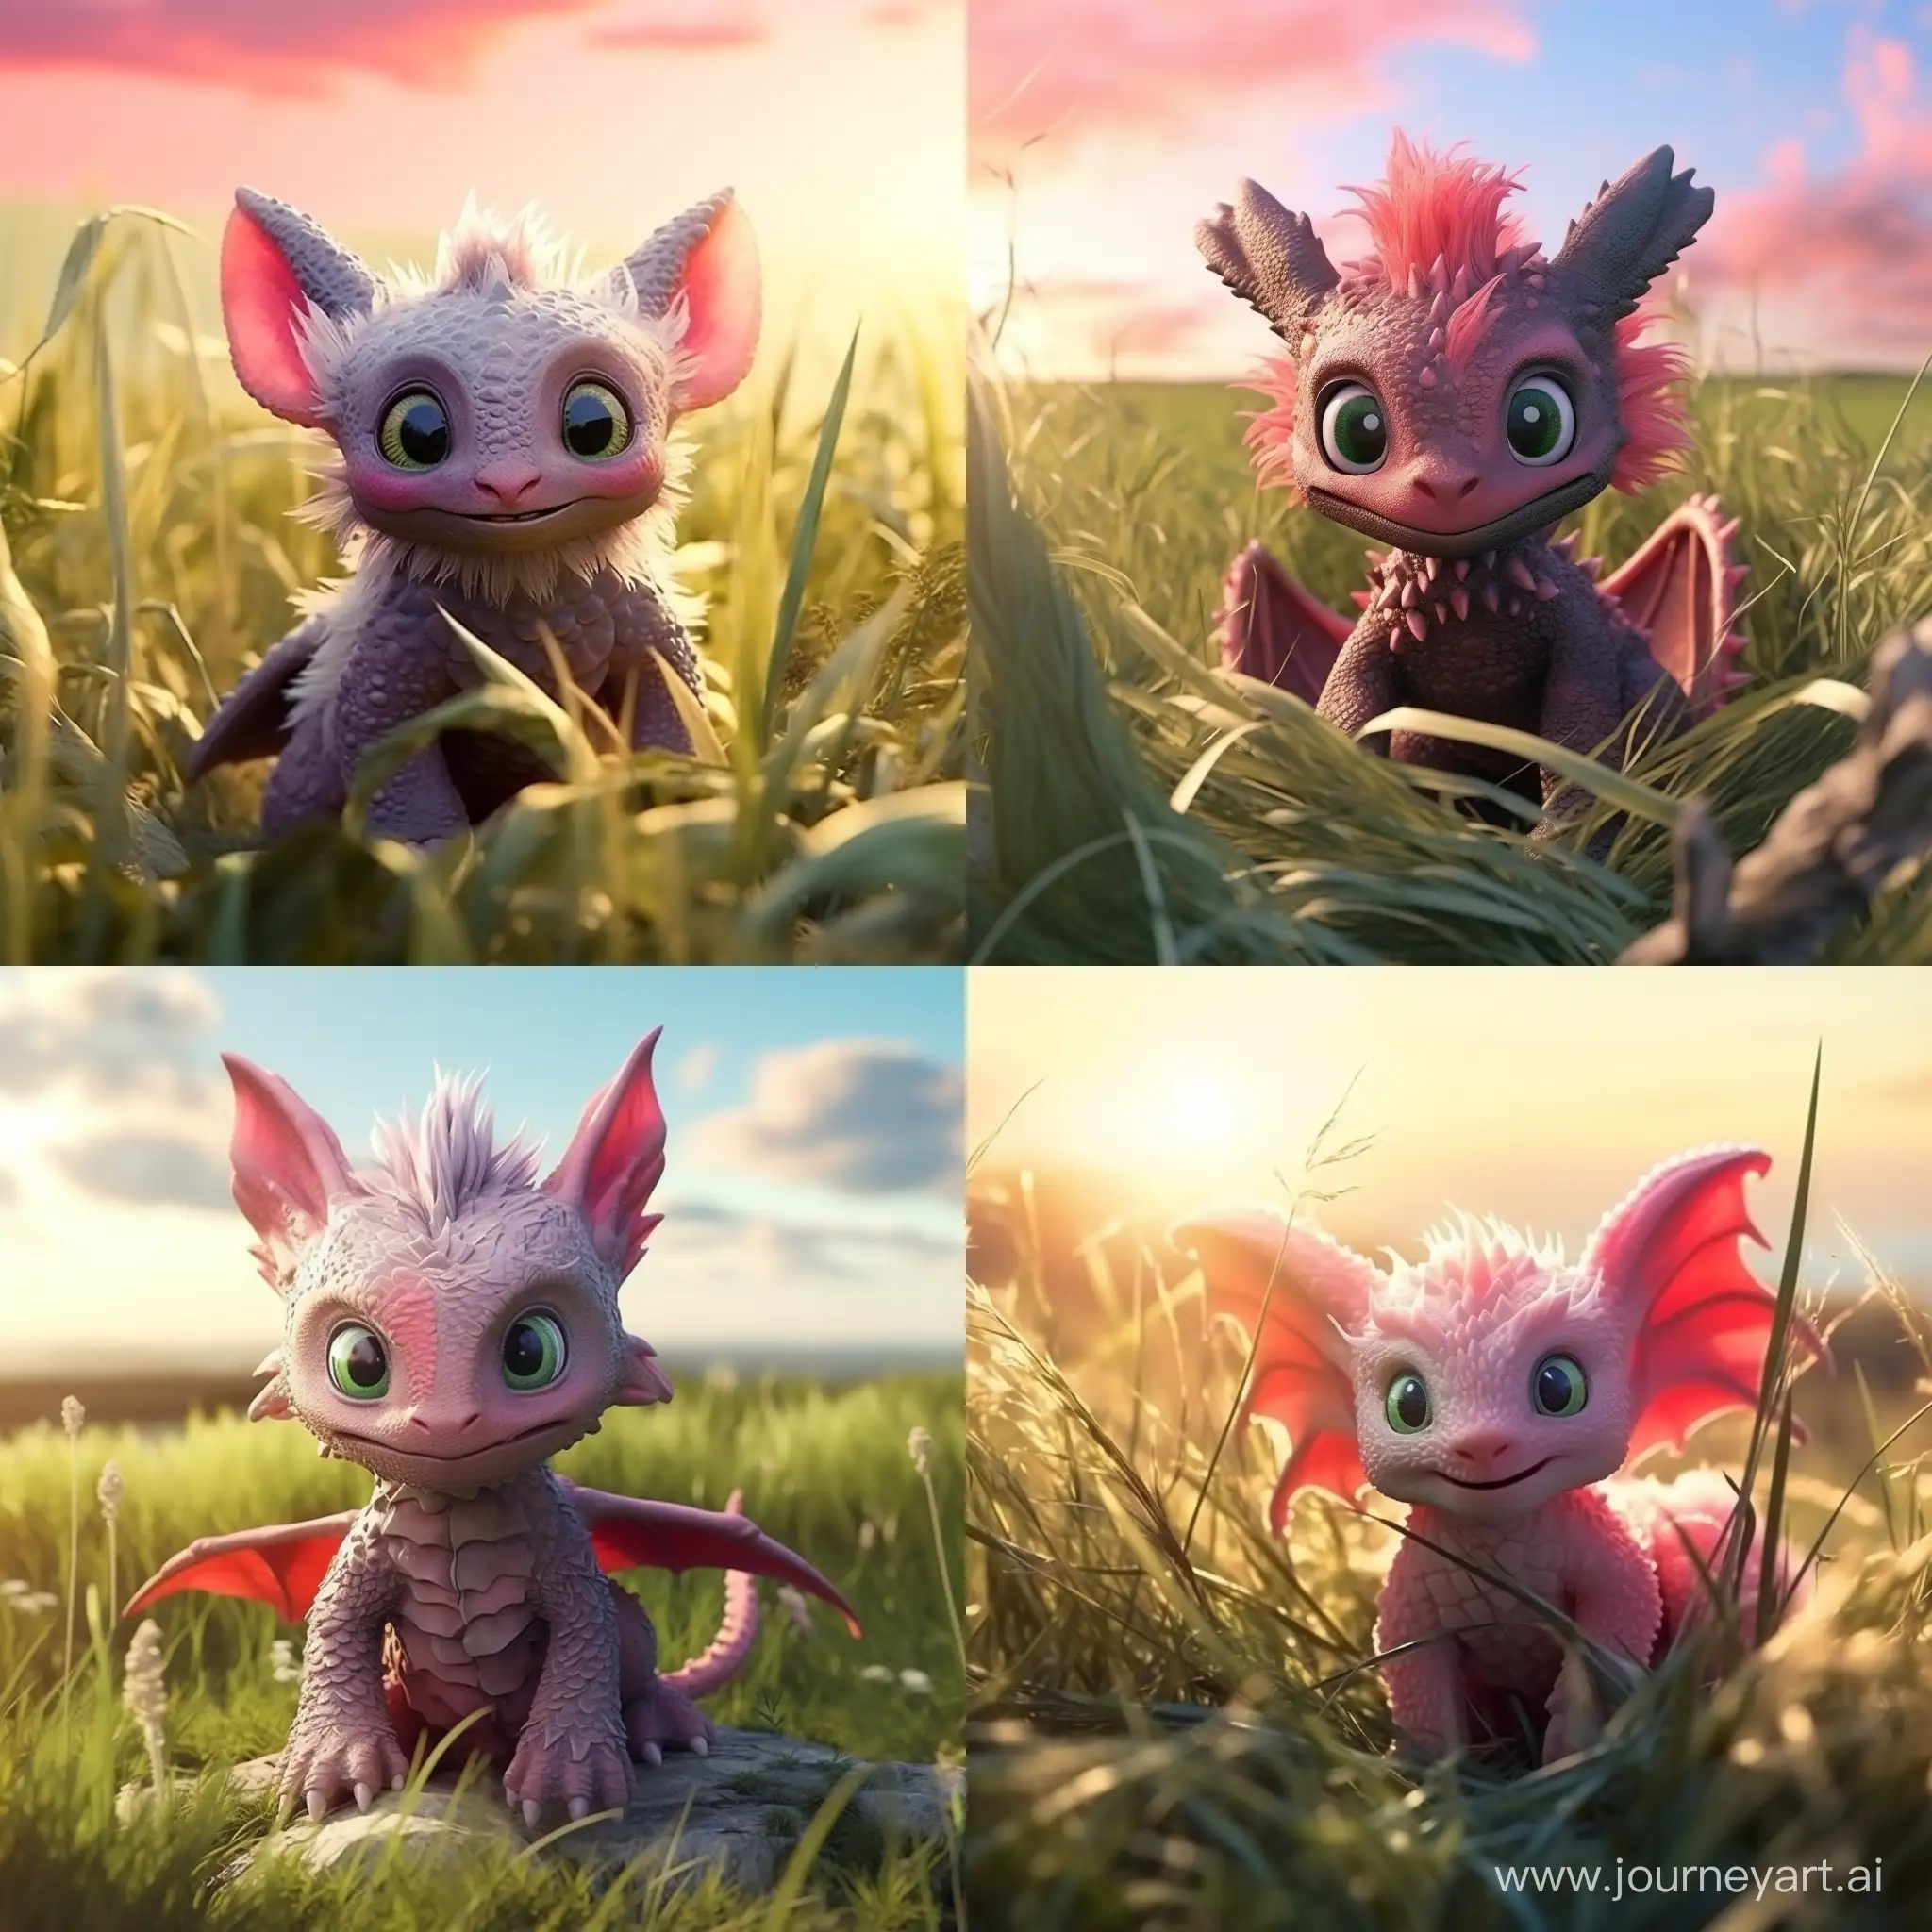 Adorable-GreenRed-Dragon-Cub-Soaking-Up-Sunlight-in-Vibrant-Field